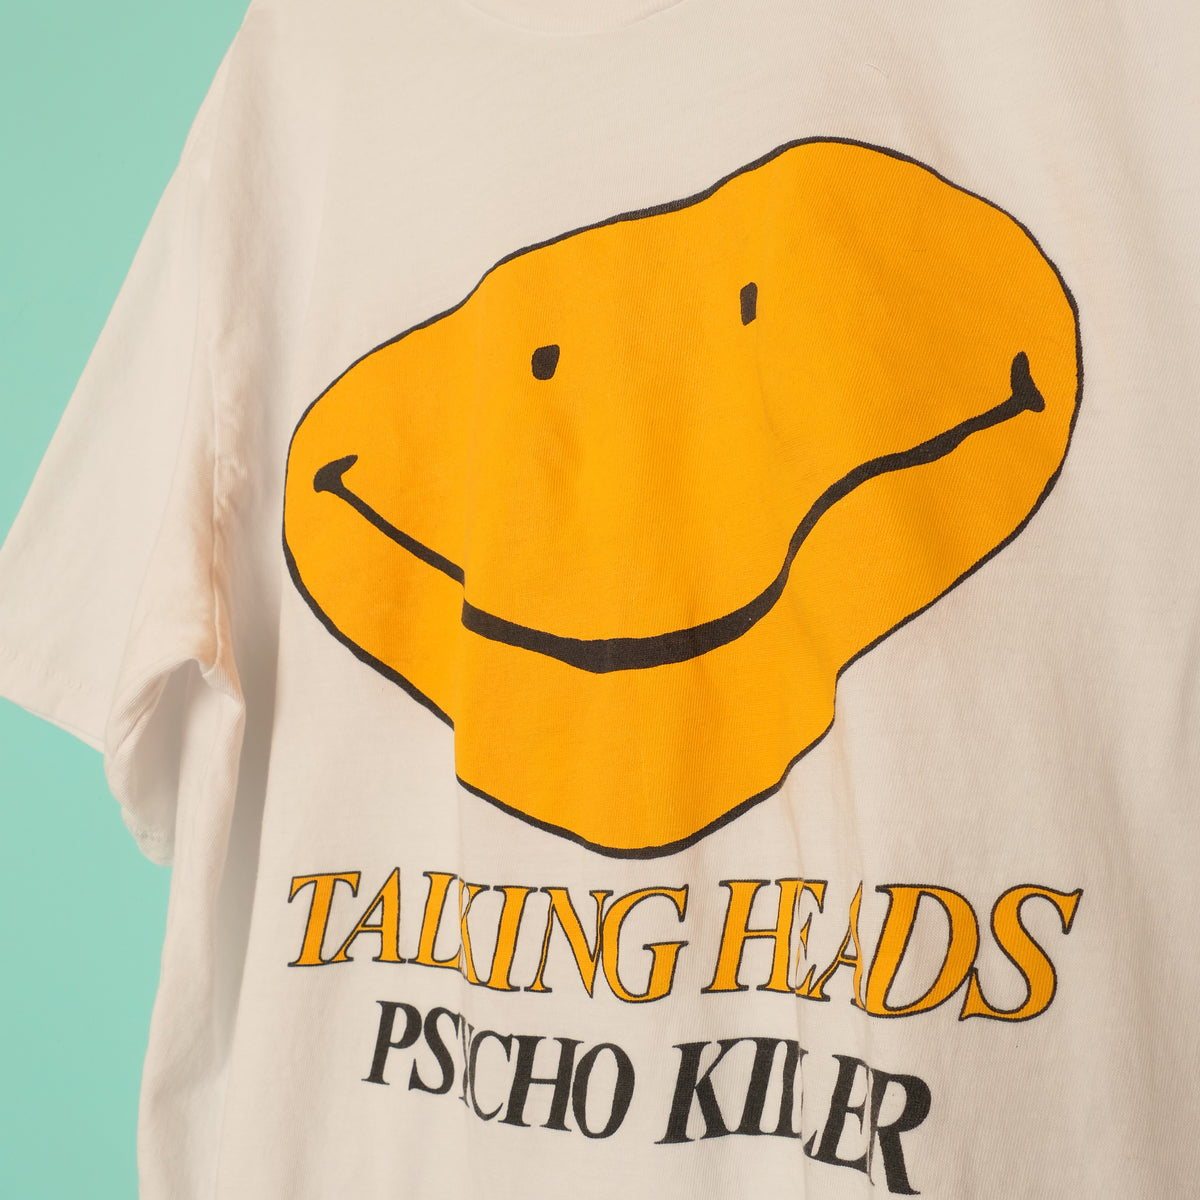 Talking Heads Psycho Killer Tee